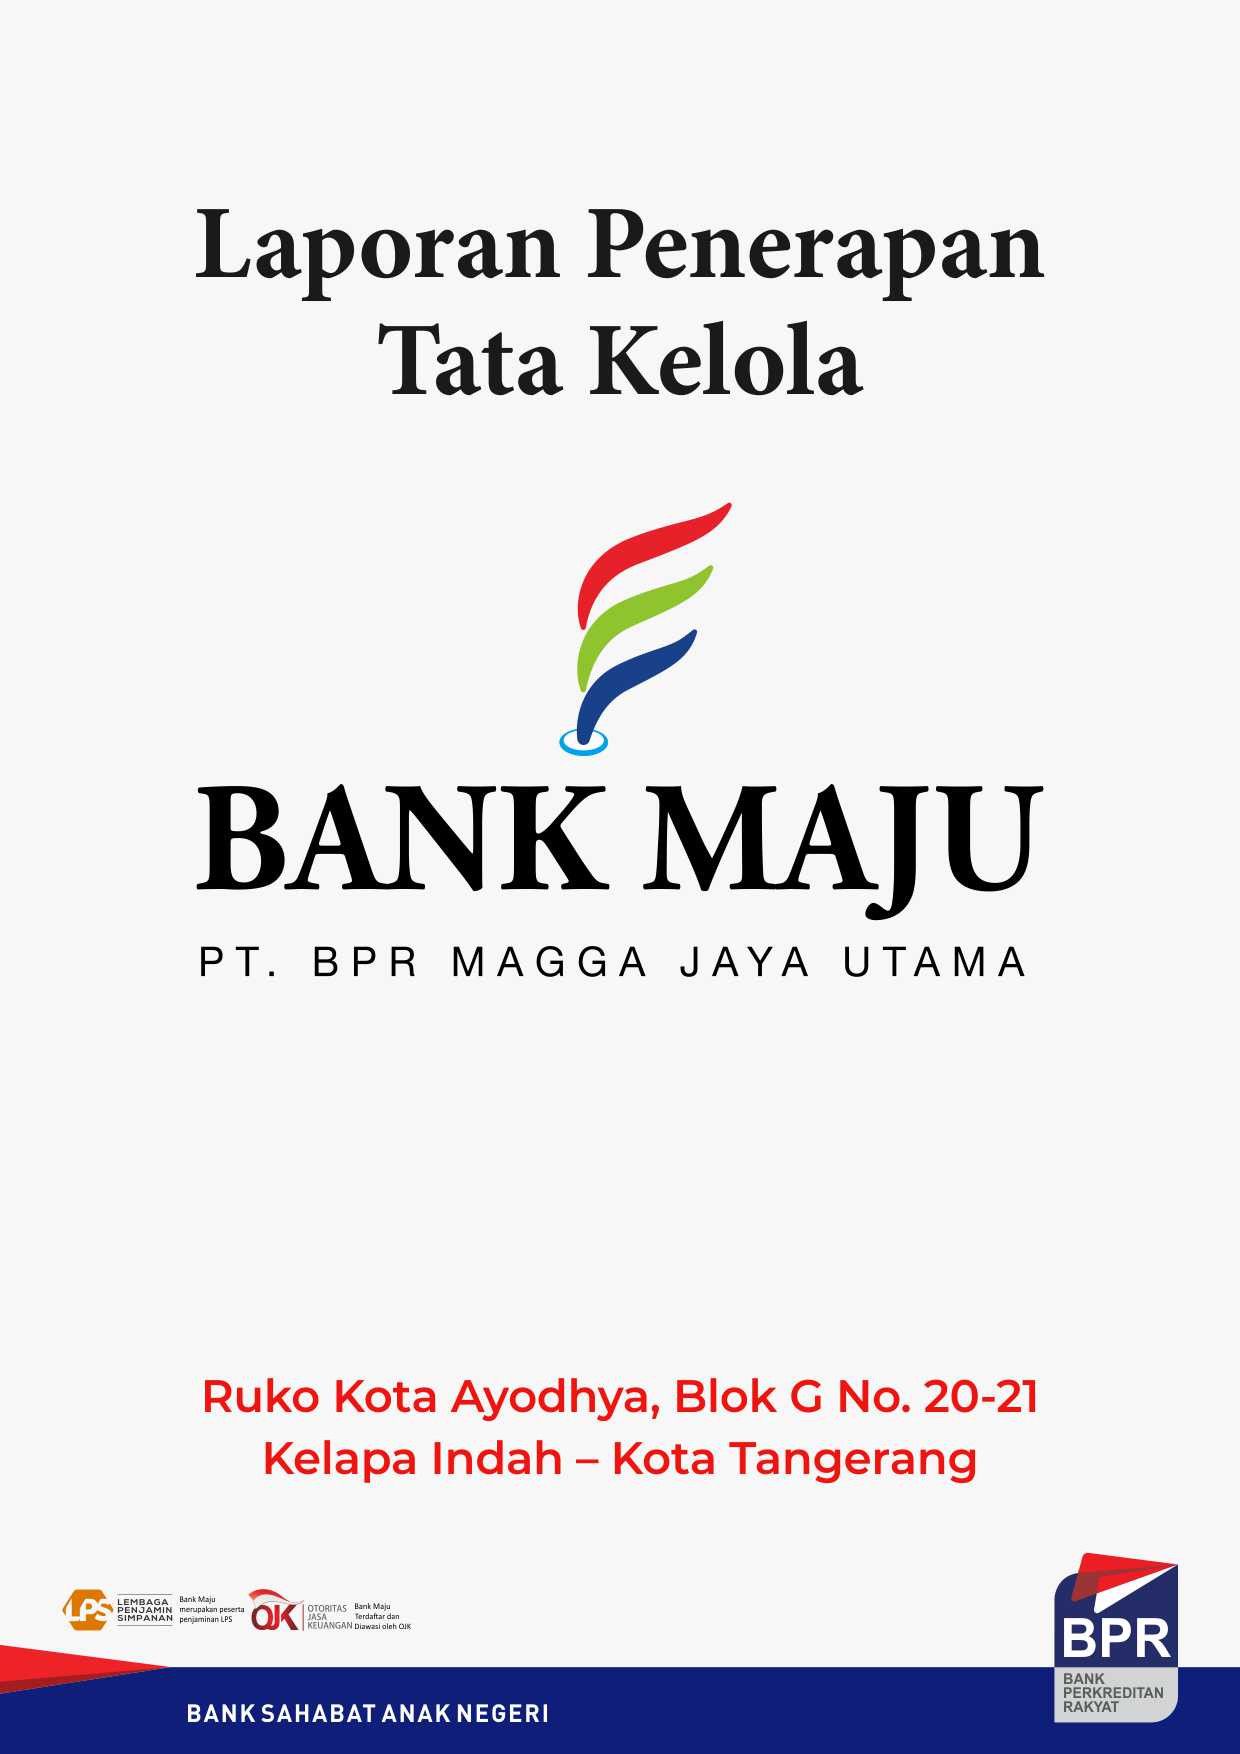 Tata Kelola PT BPR Magga Jaya Utama